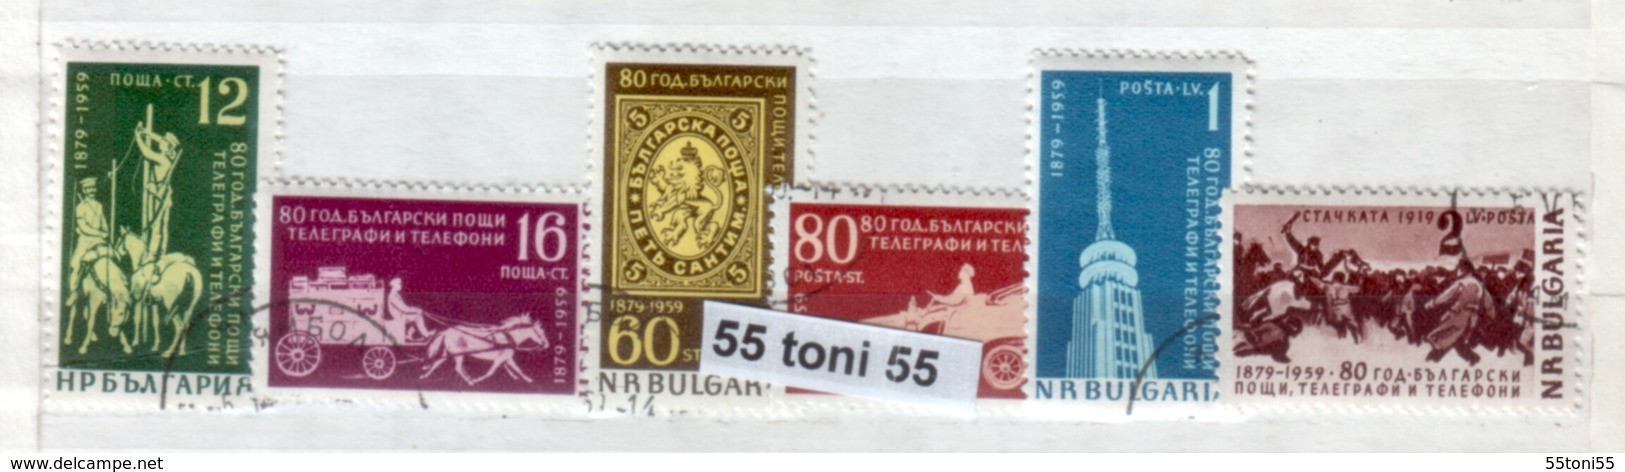 1959 80 Anniversaire De La Poste ( Chevaux - Cavalli) 6v. - Oblitere/used (O)Bulgarien / Bulgaria - Gebruikt